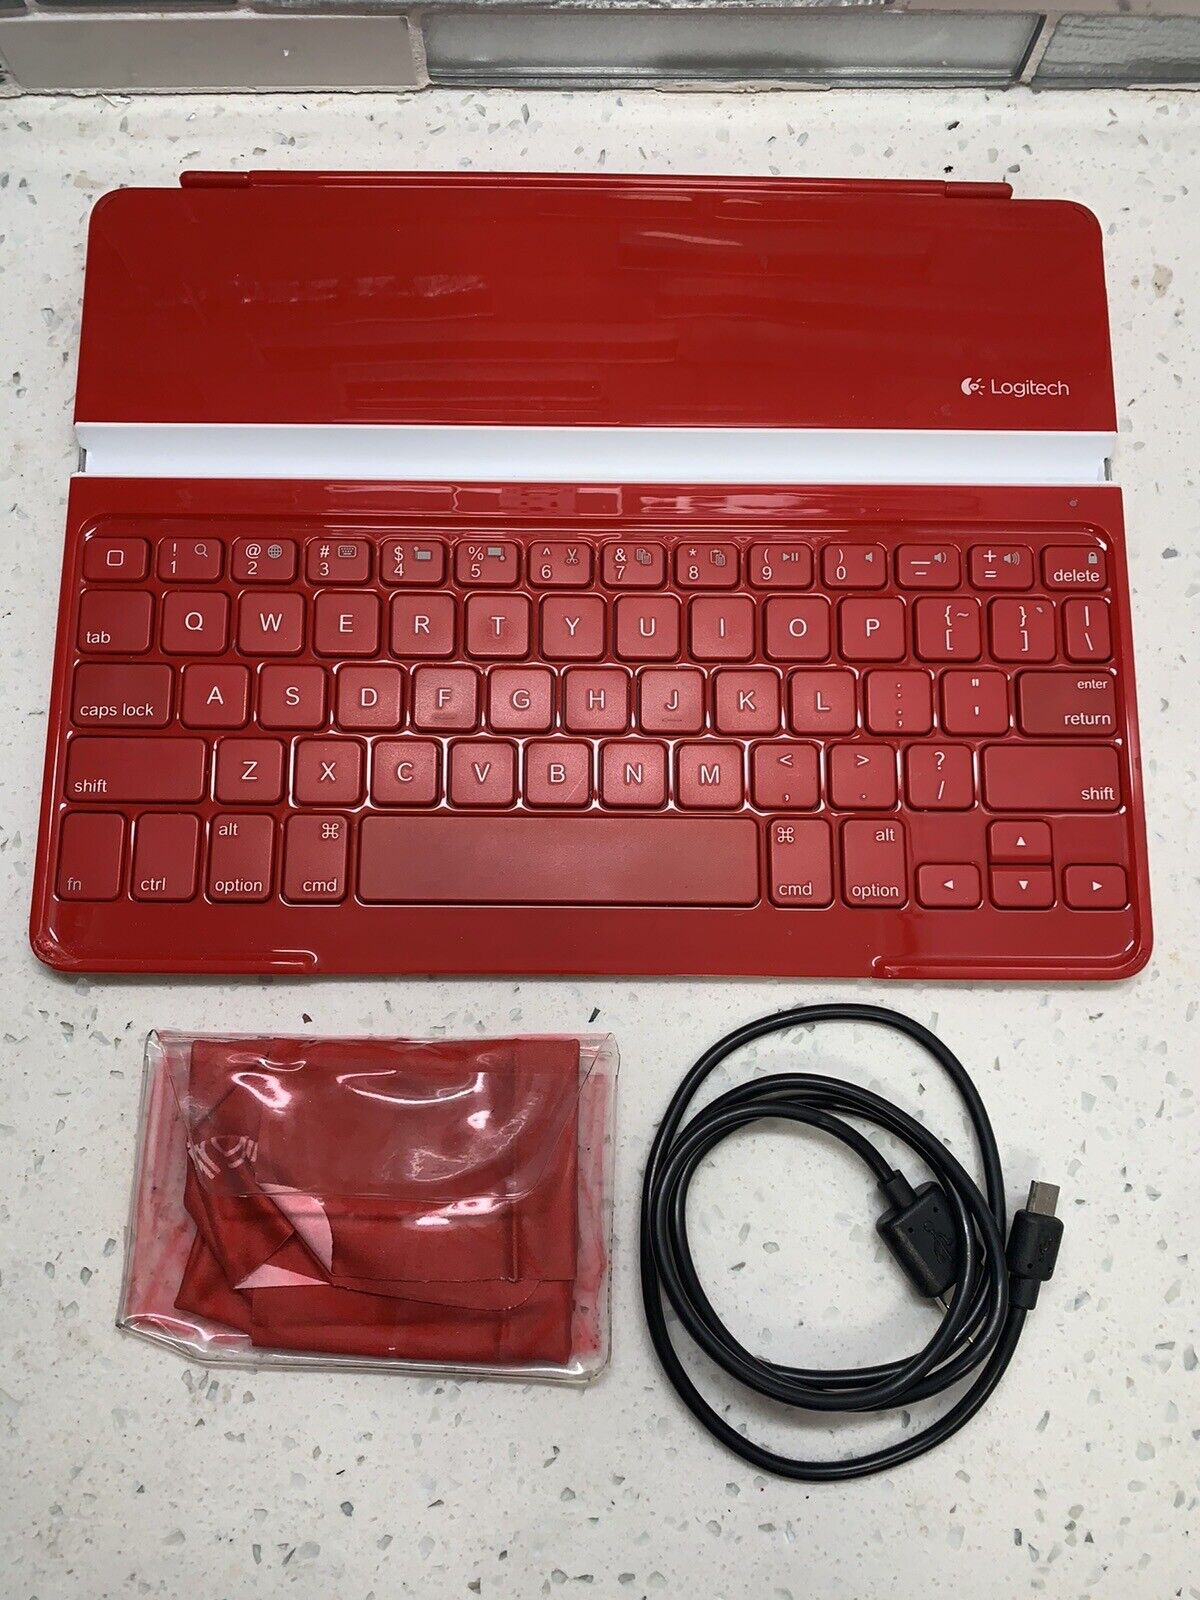 Logitech Ultrathin Red Wireless Bluetooth Keyboard Cover for IPad 2/3/4 Works